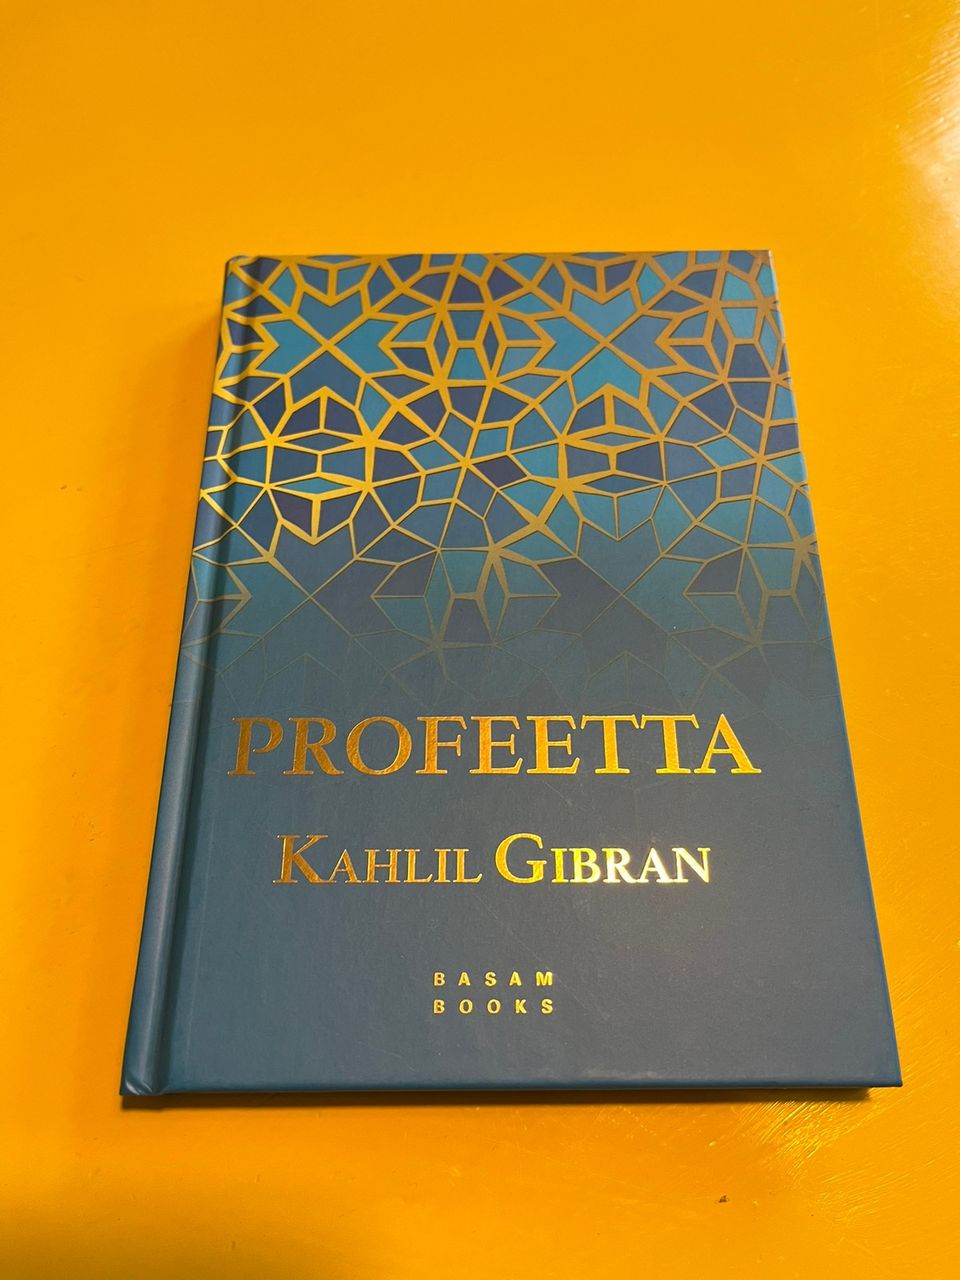 Kahlil Gibran - Profeetta